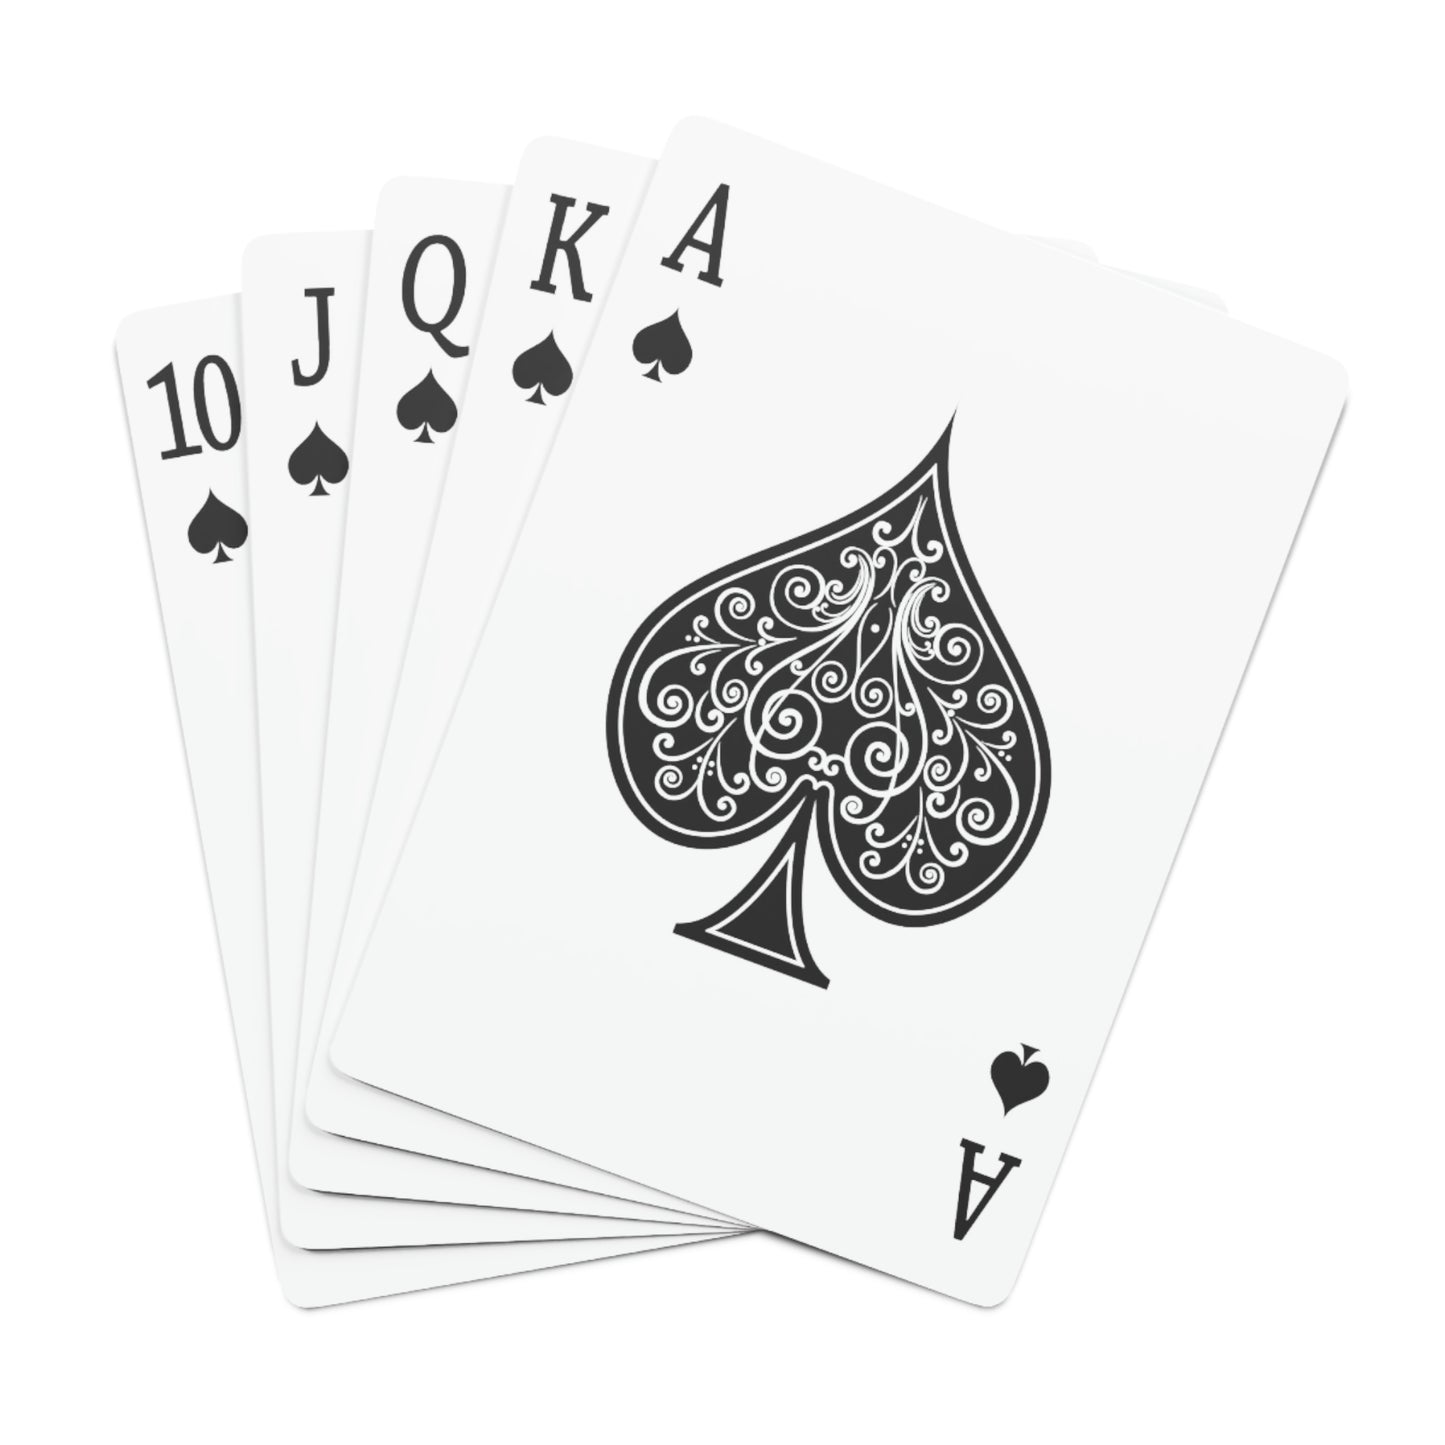 Custom Poker Cards “#BestLifeEver - PG”